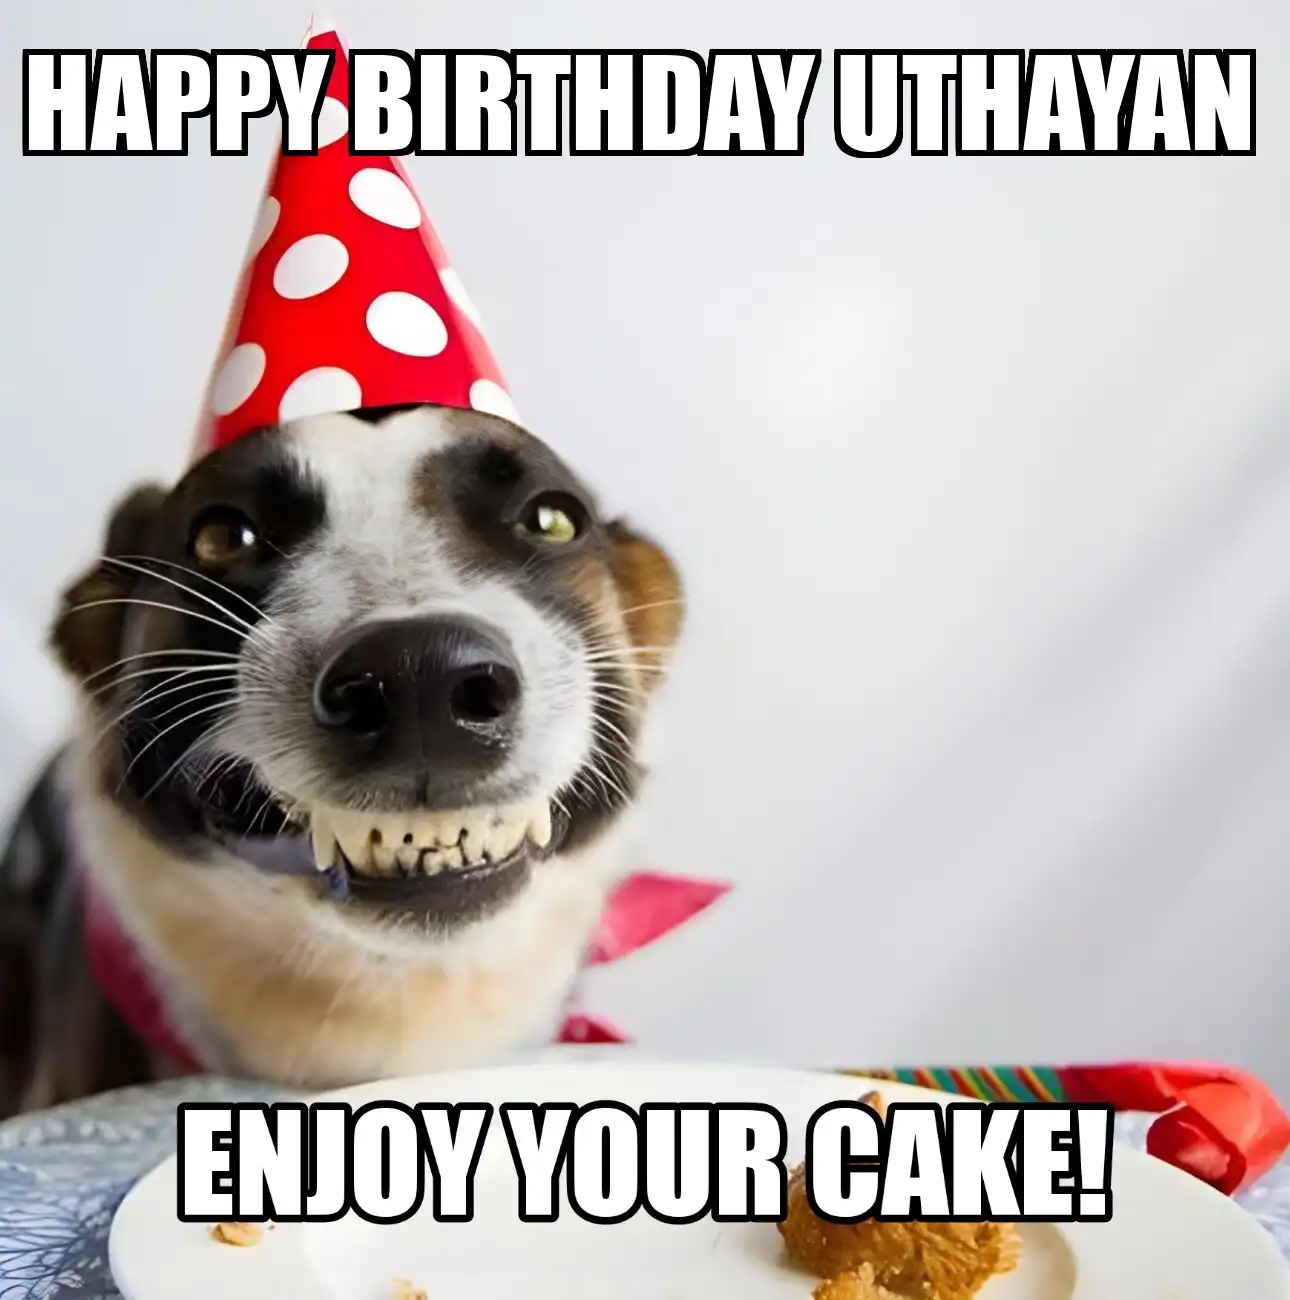 Happy Birthday Uthayan Enjoy Your Cake Dog Meme